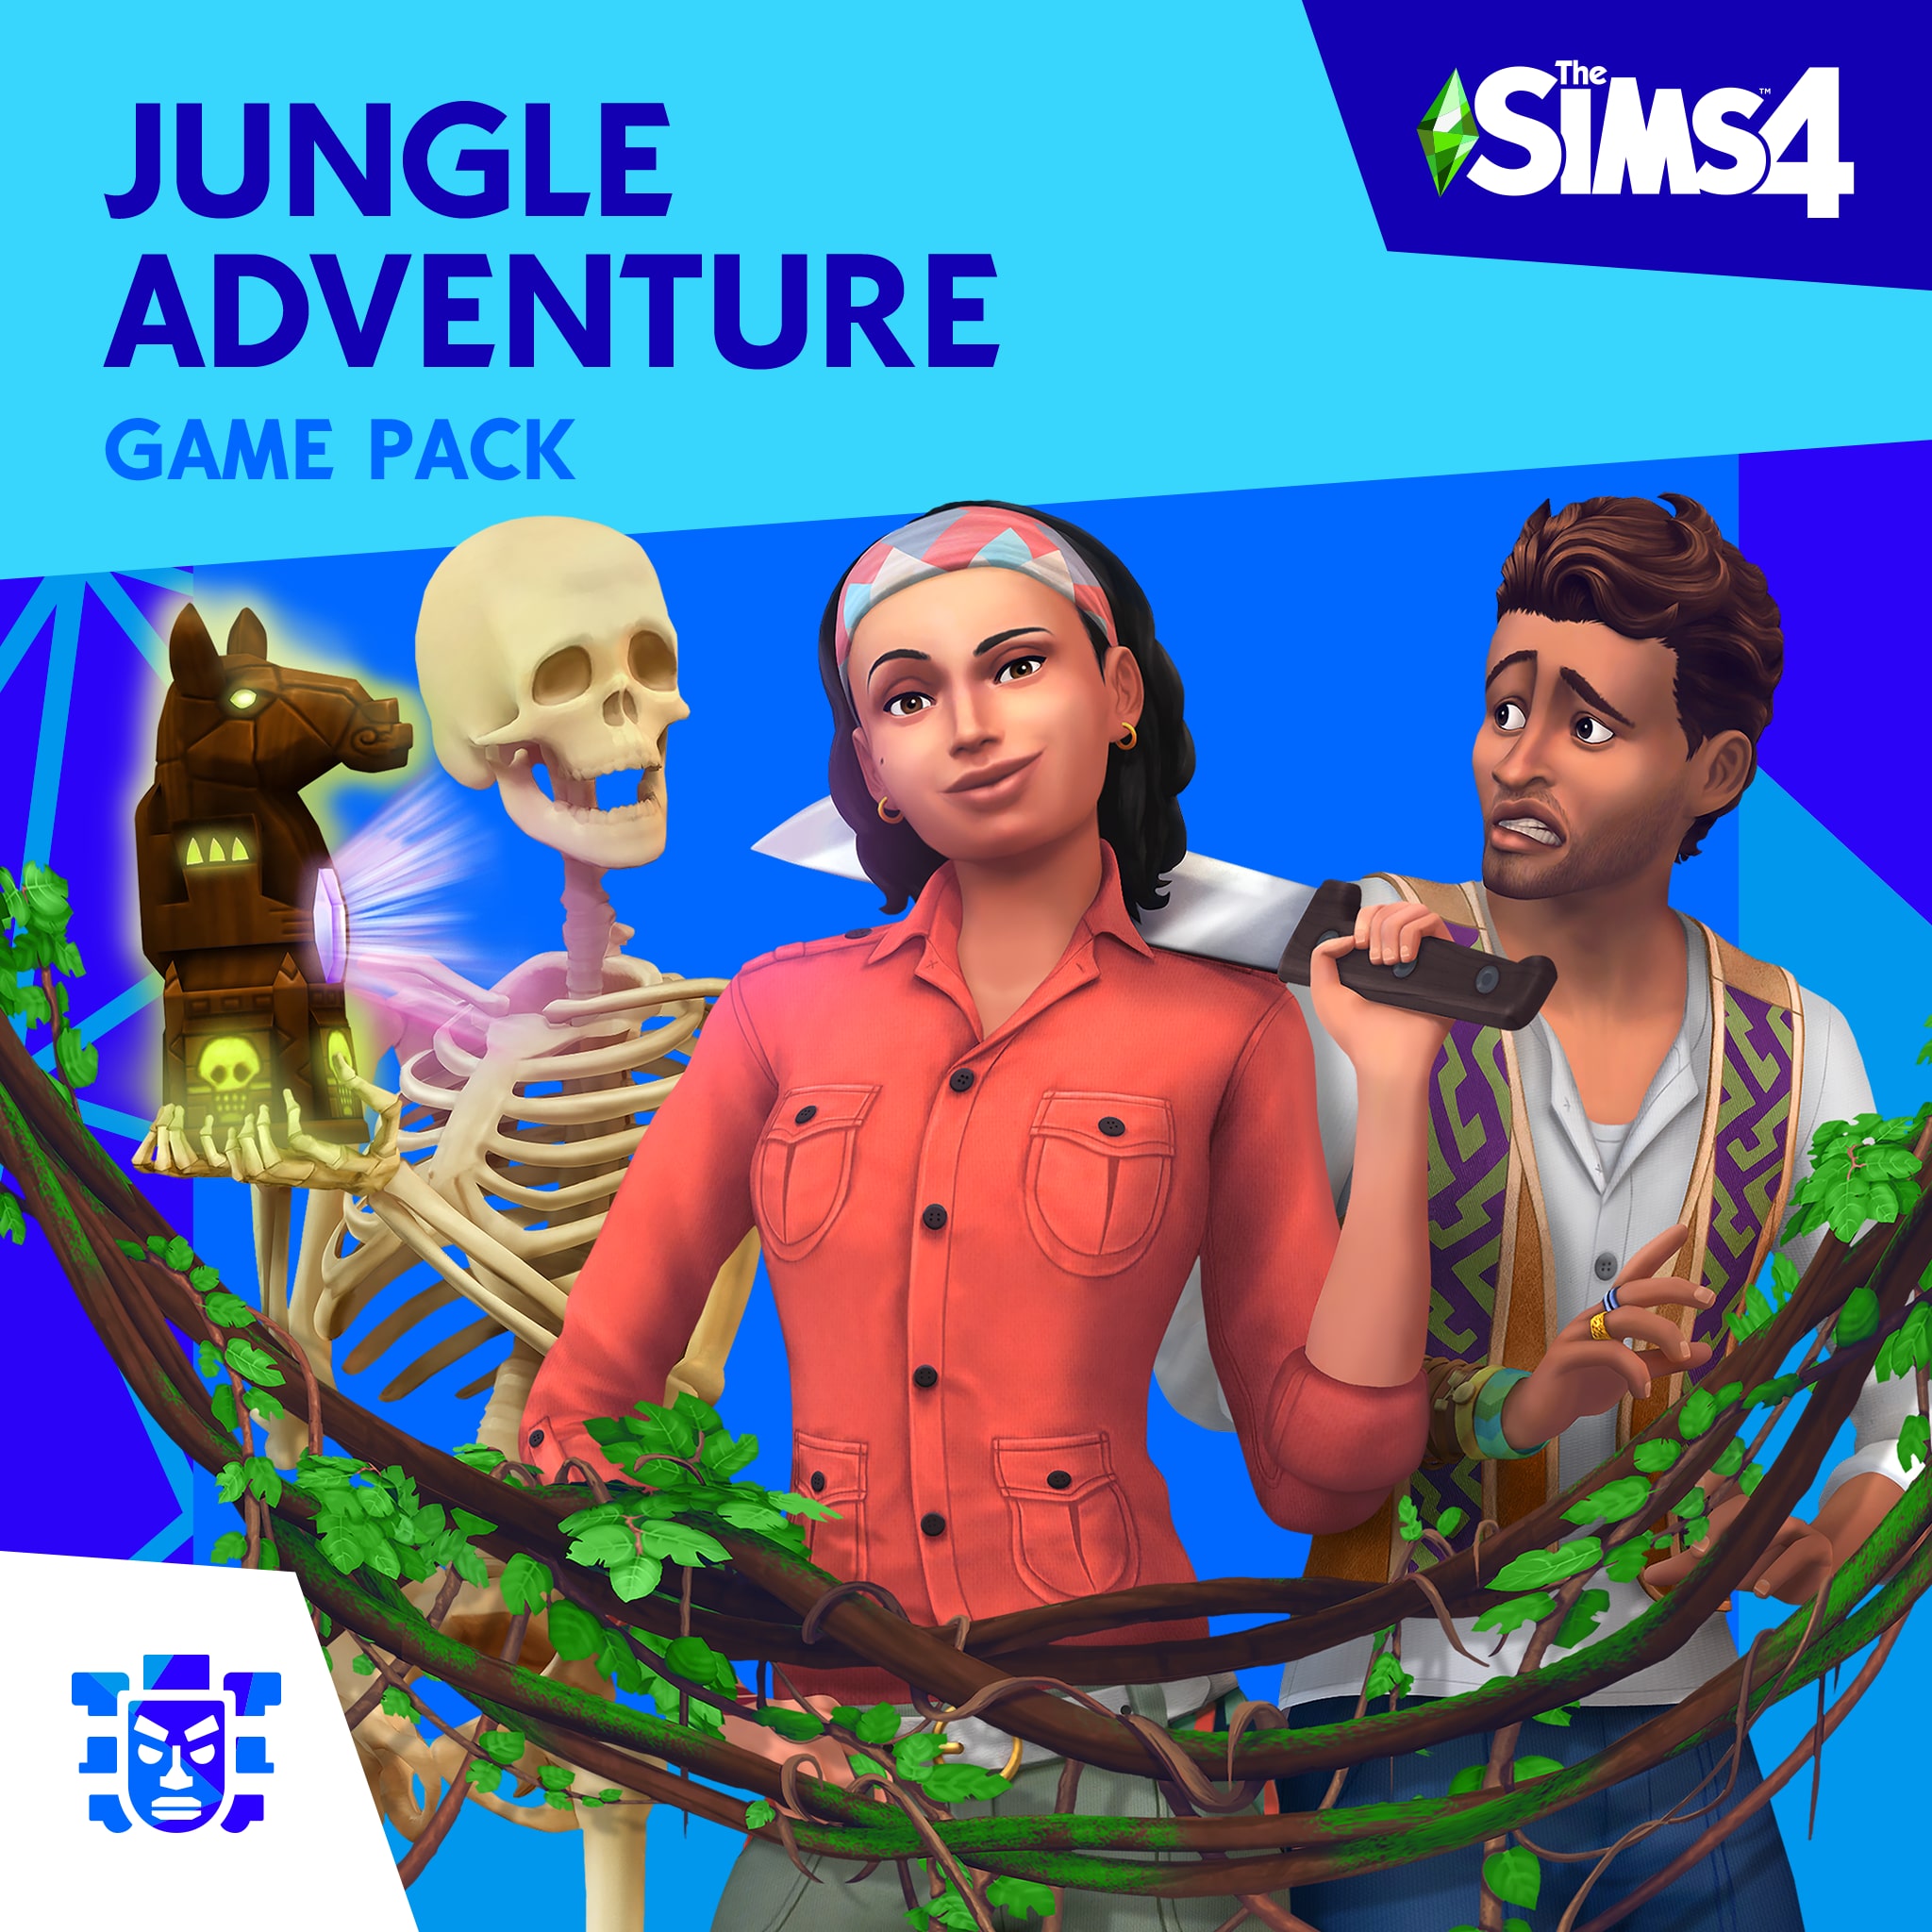 The Sims™ 4 Aventuras na Selva